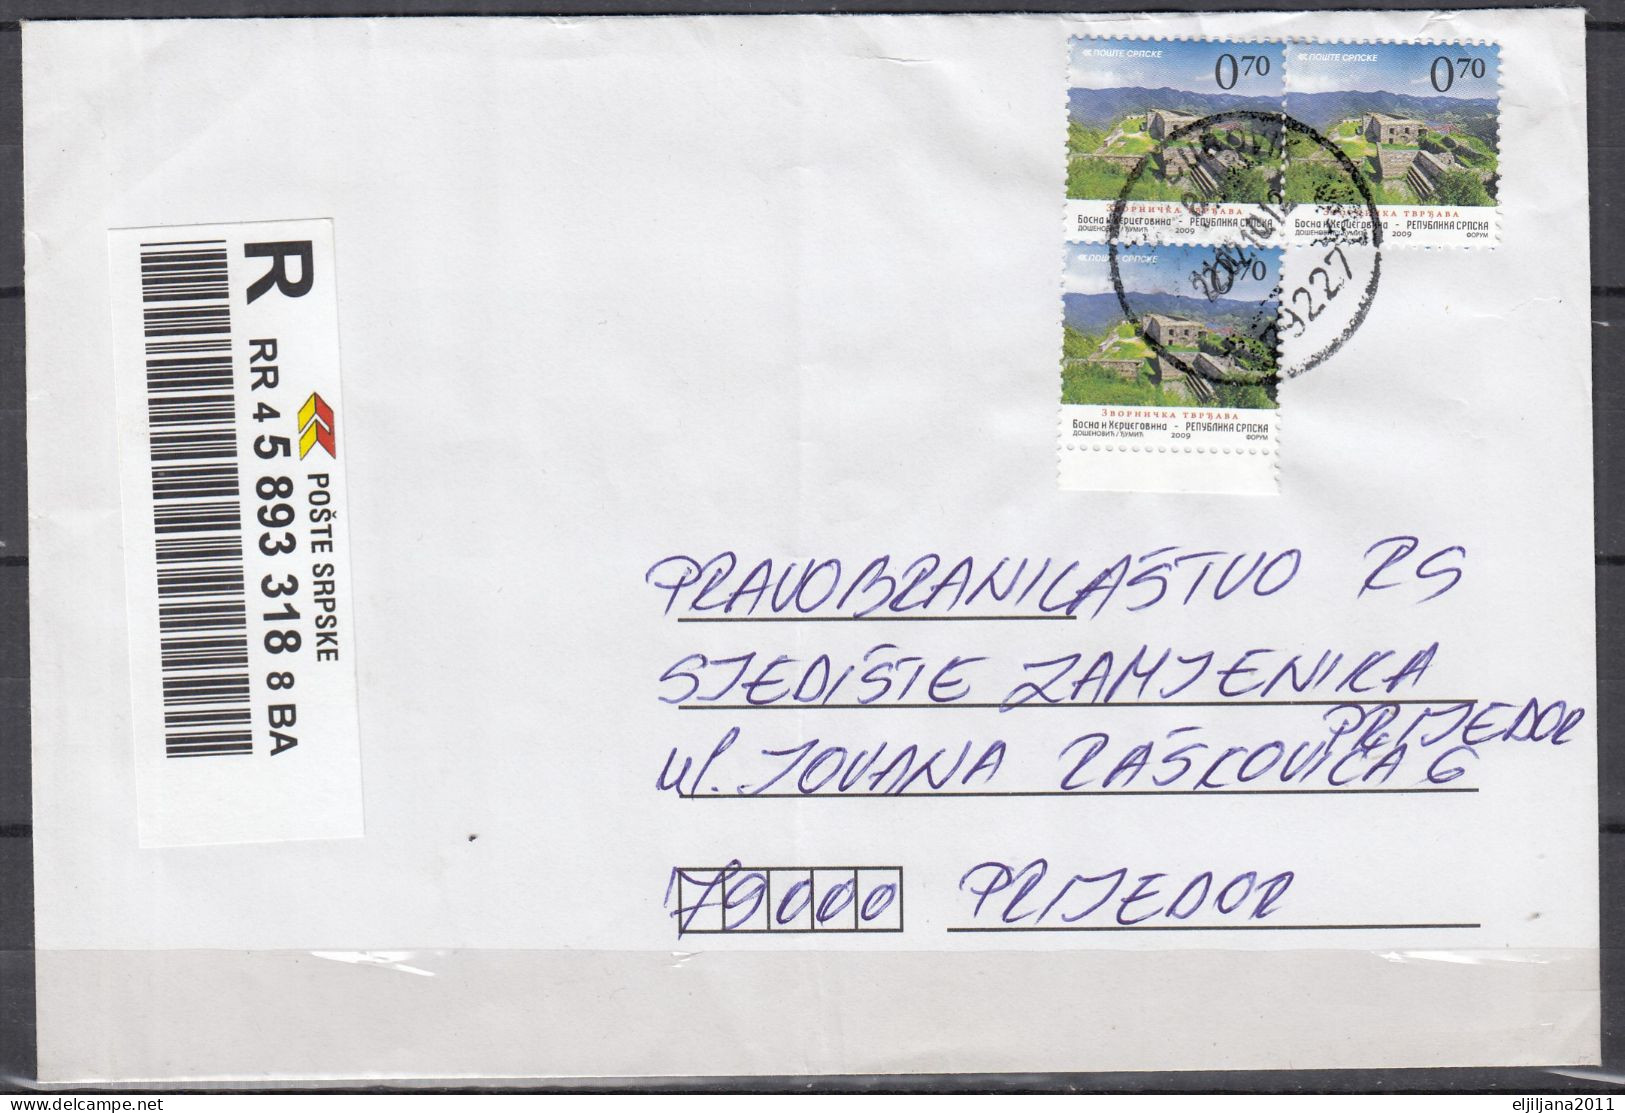 Republika Srpska BiH Serbian Republic 2008 - 2010 Prijedor ⁕ 4 Used Cover Registered Mail - Bosnie-Herzegovine